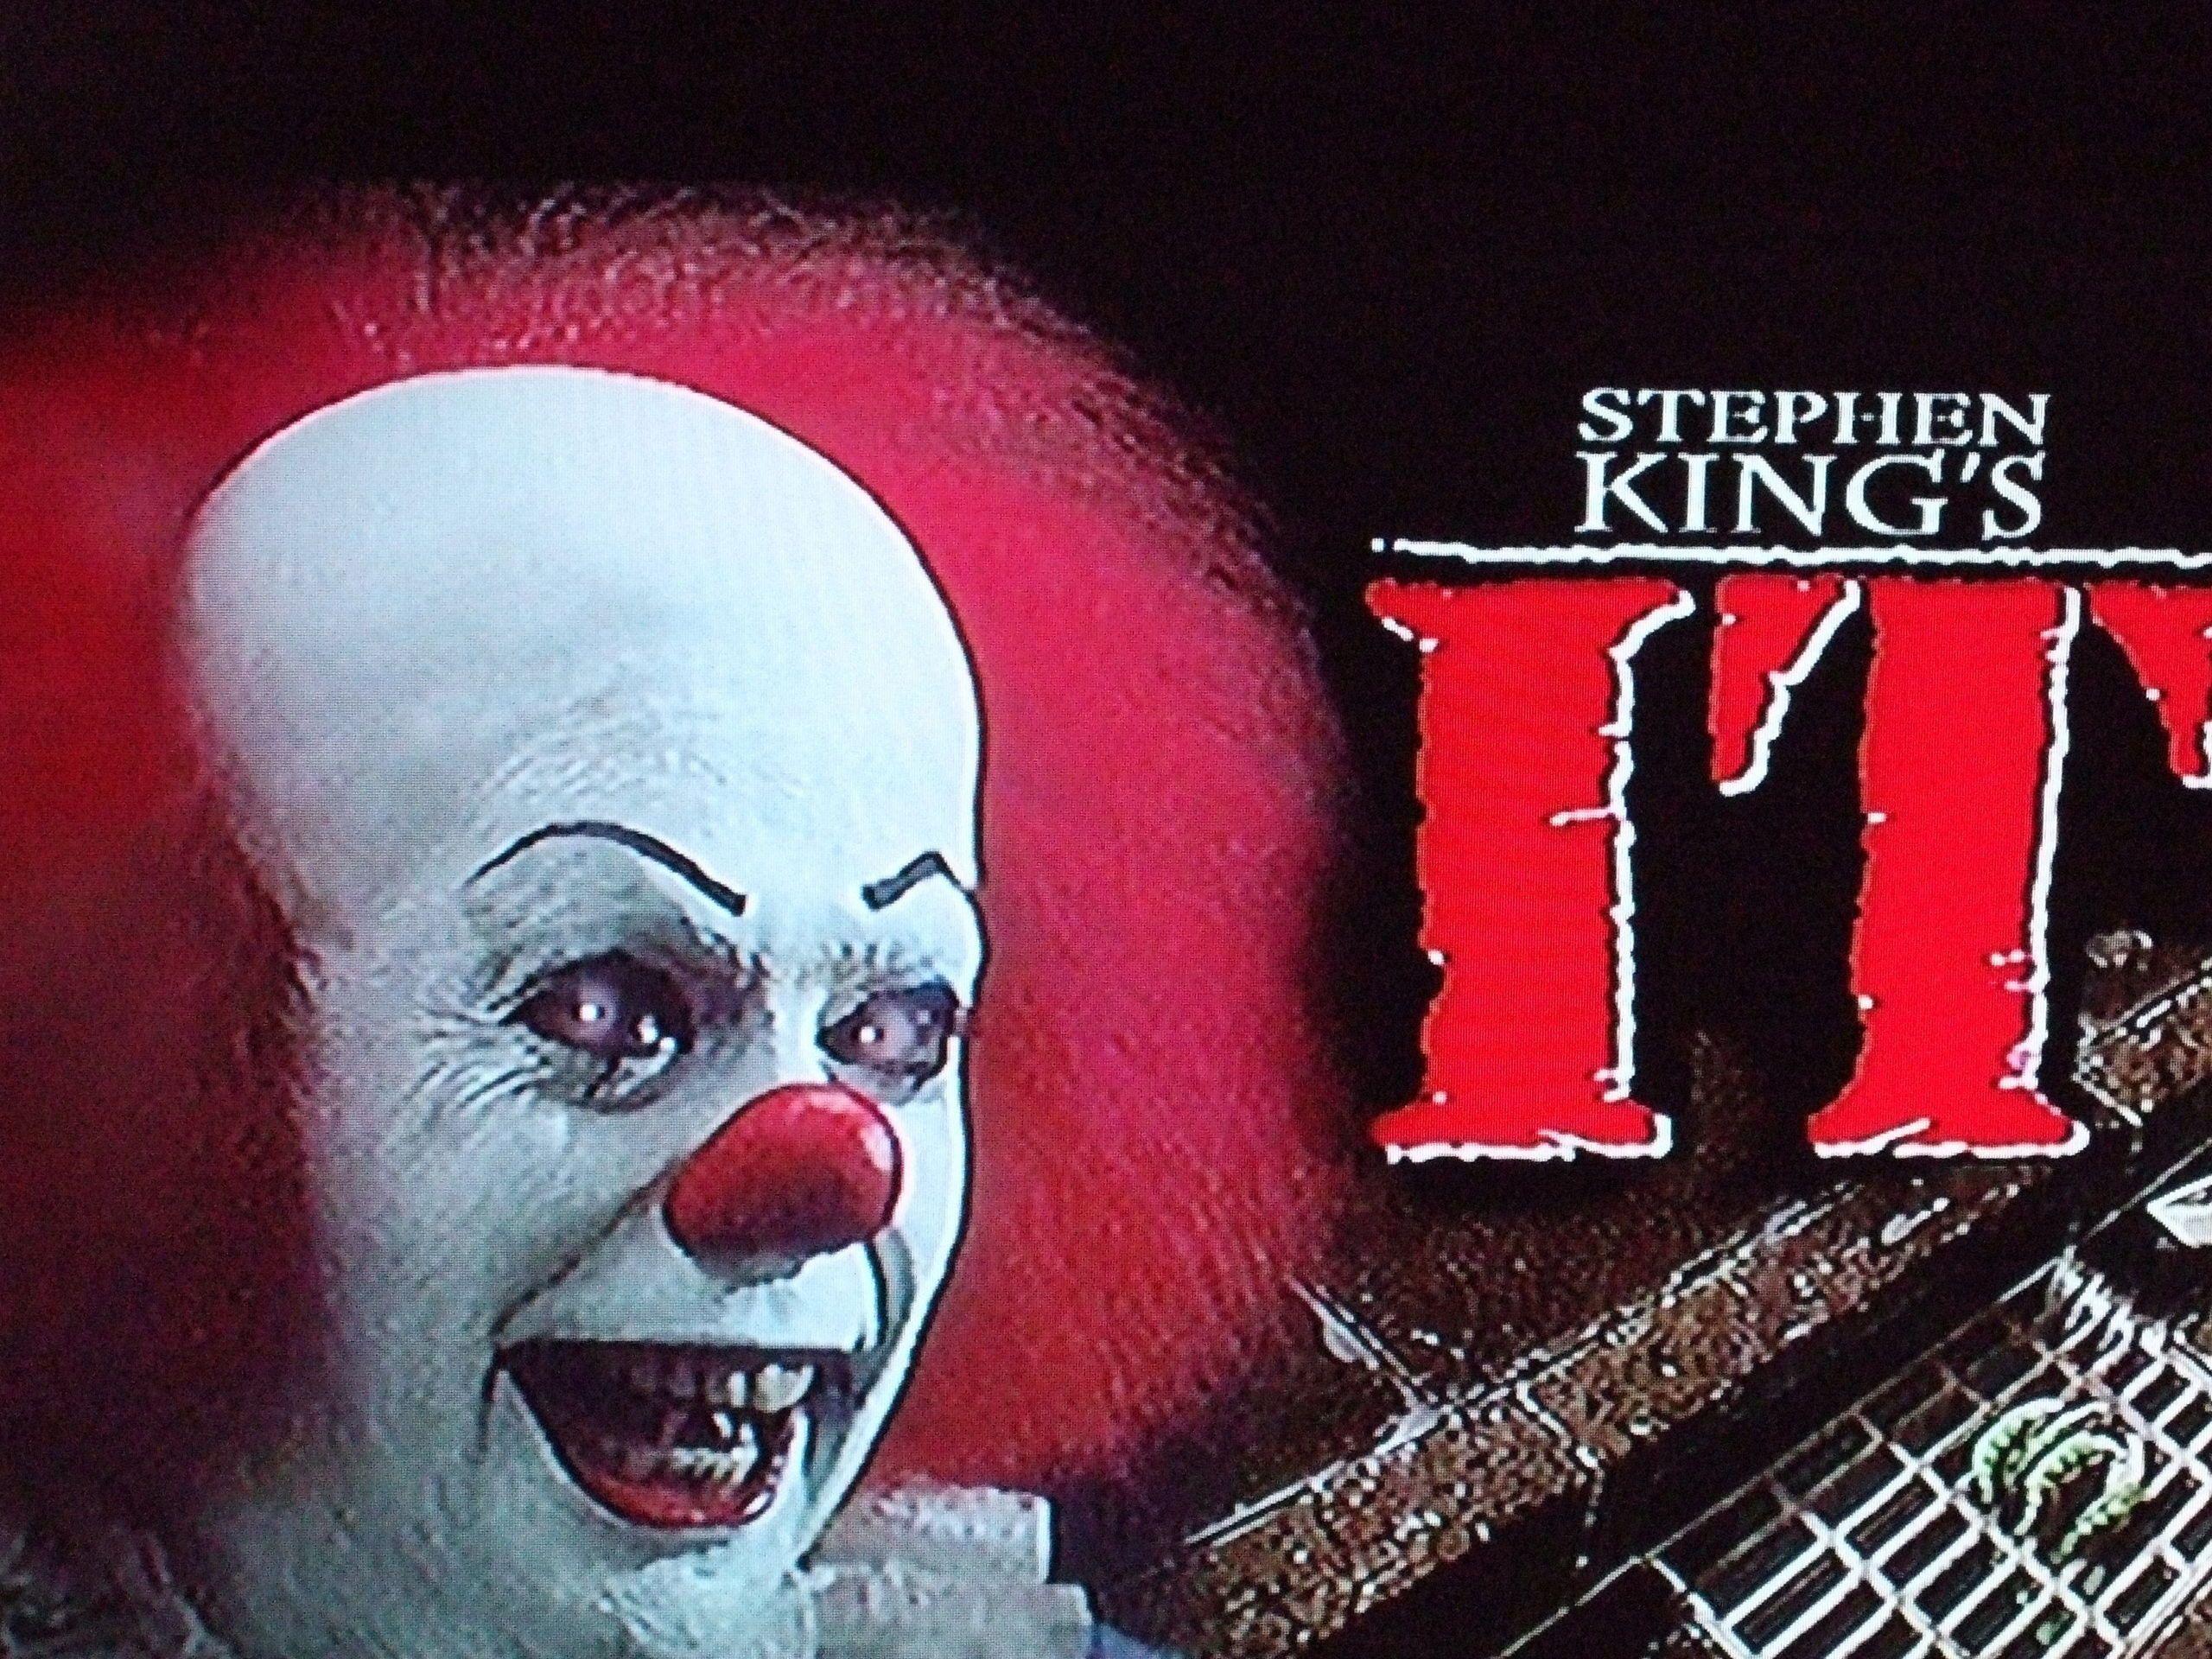 Staten Island Clown Linked To Film Company